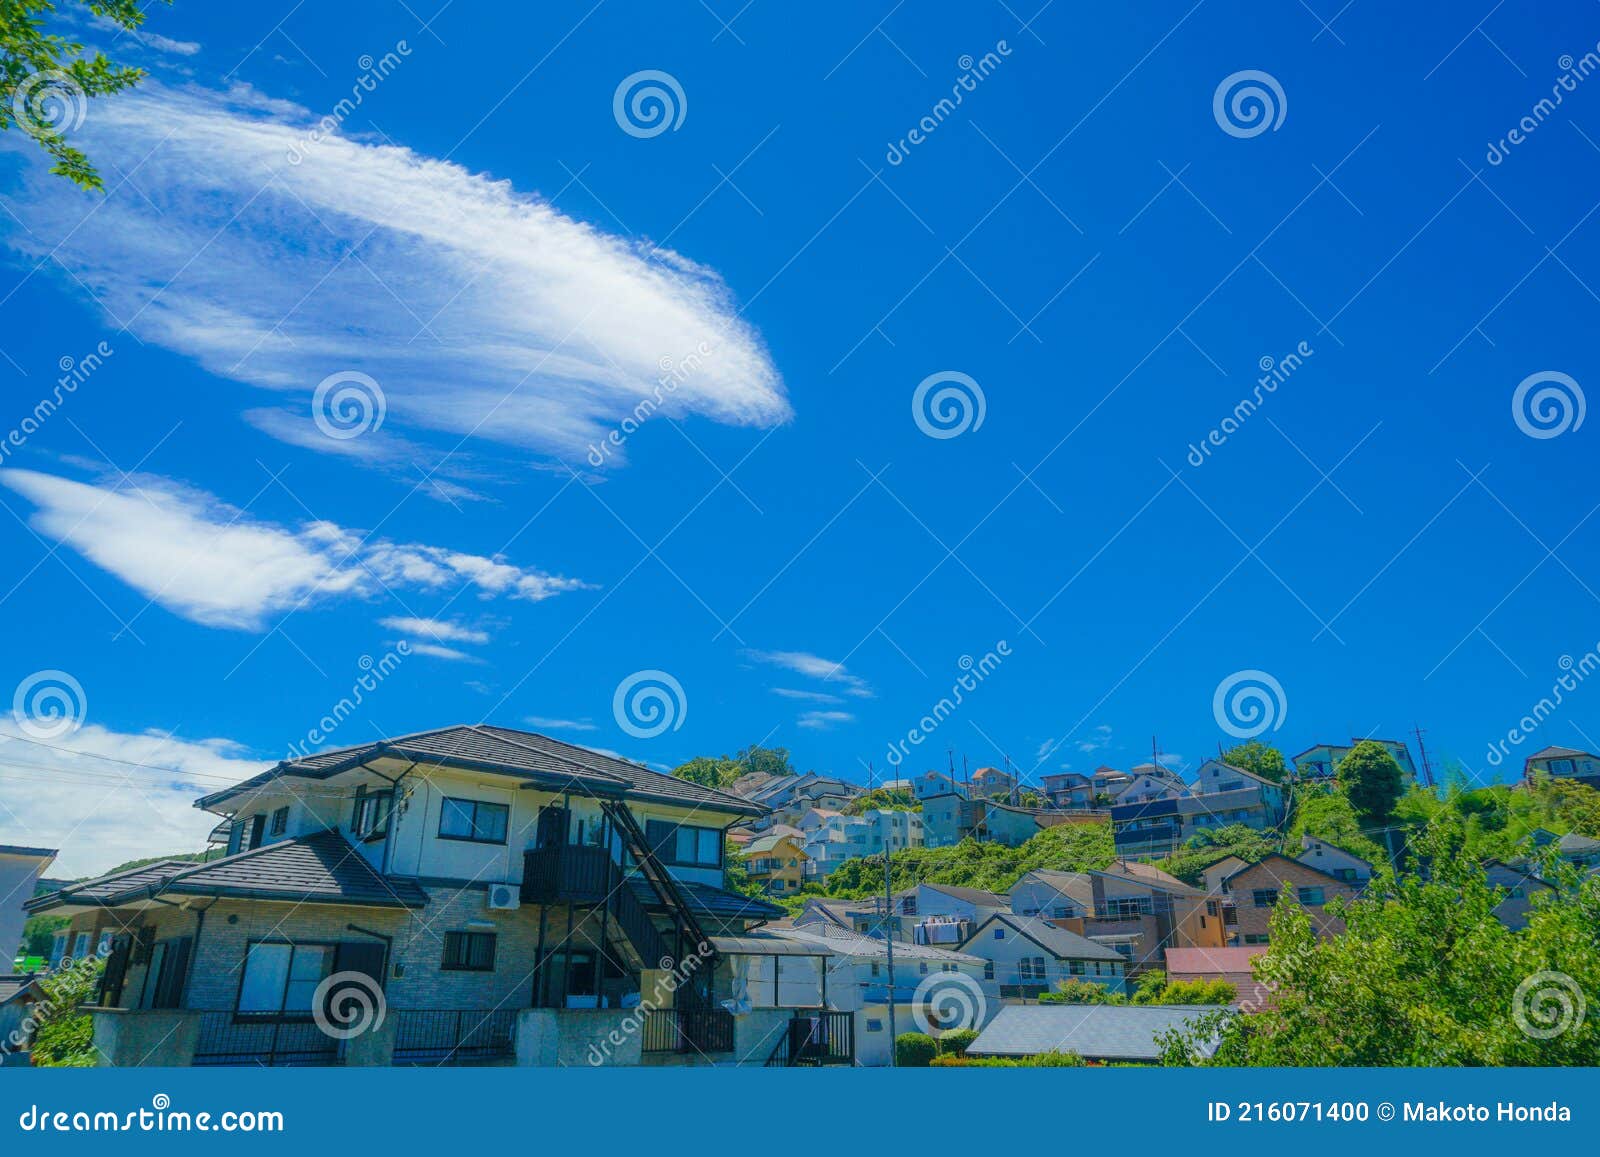 hino city skyline and the blue sky